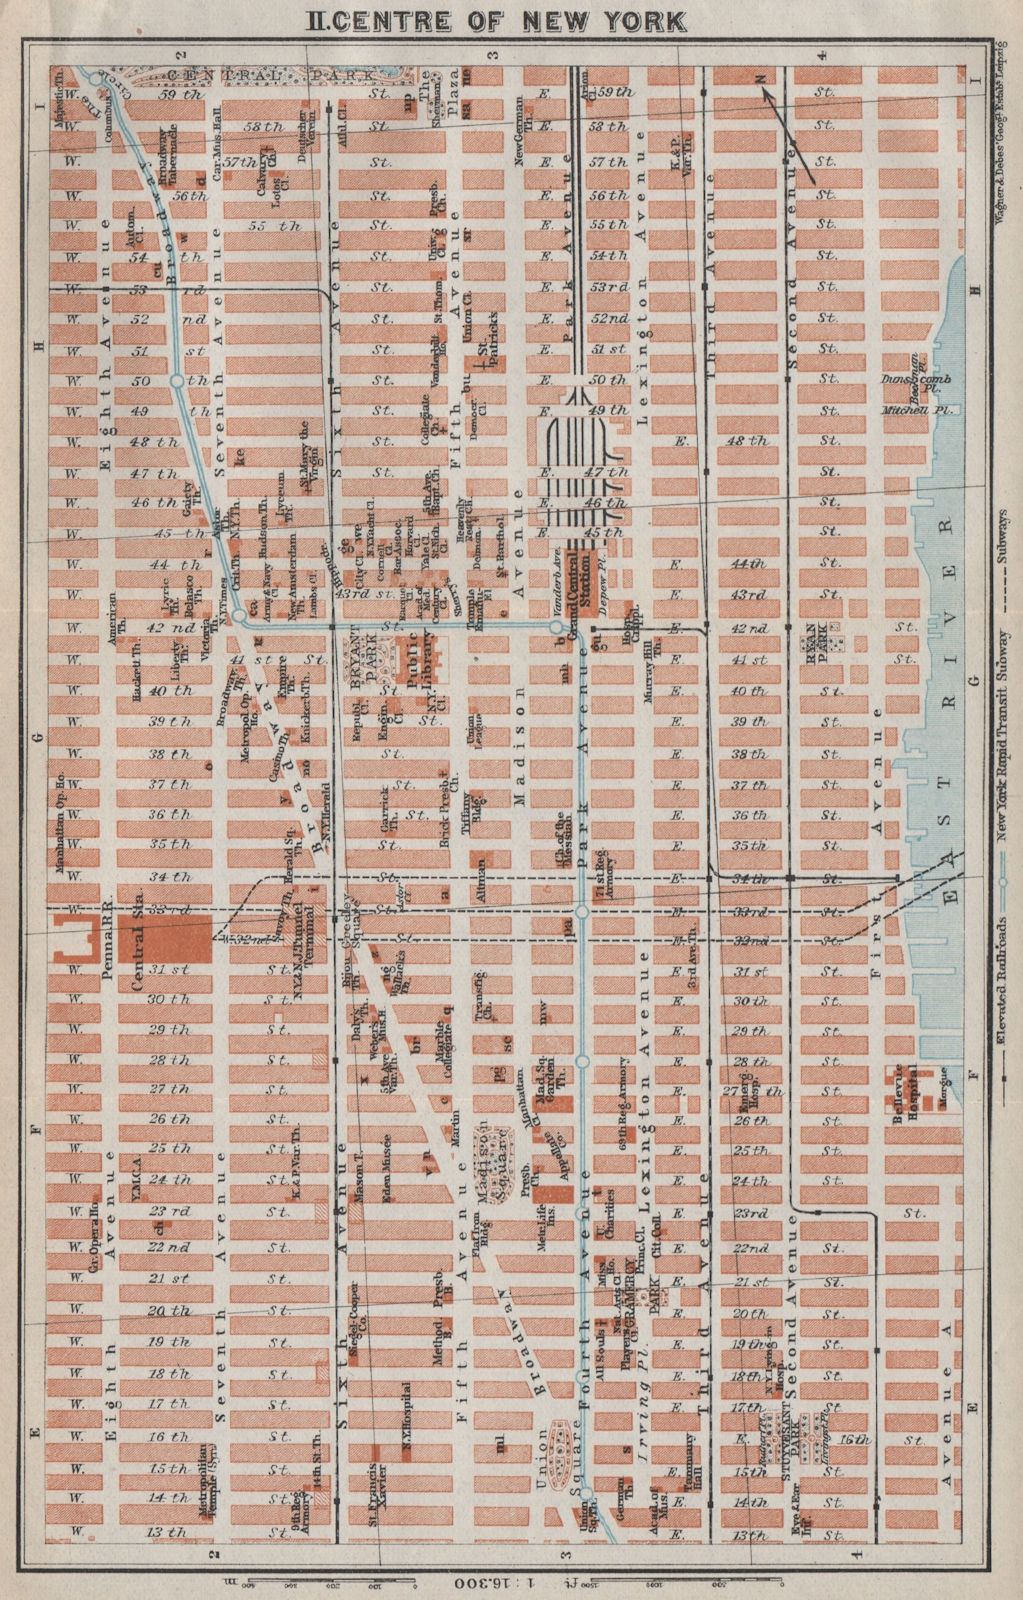 MIDtown DOWNTOWN MANHATTAN. New York City antique town plan. BAEDEKER 1909 map